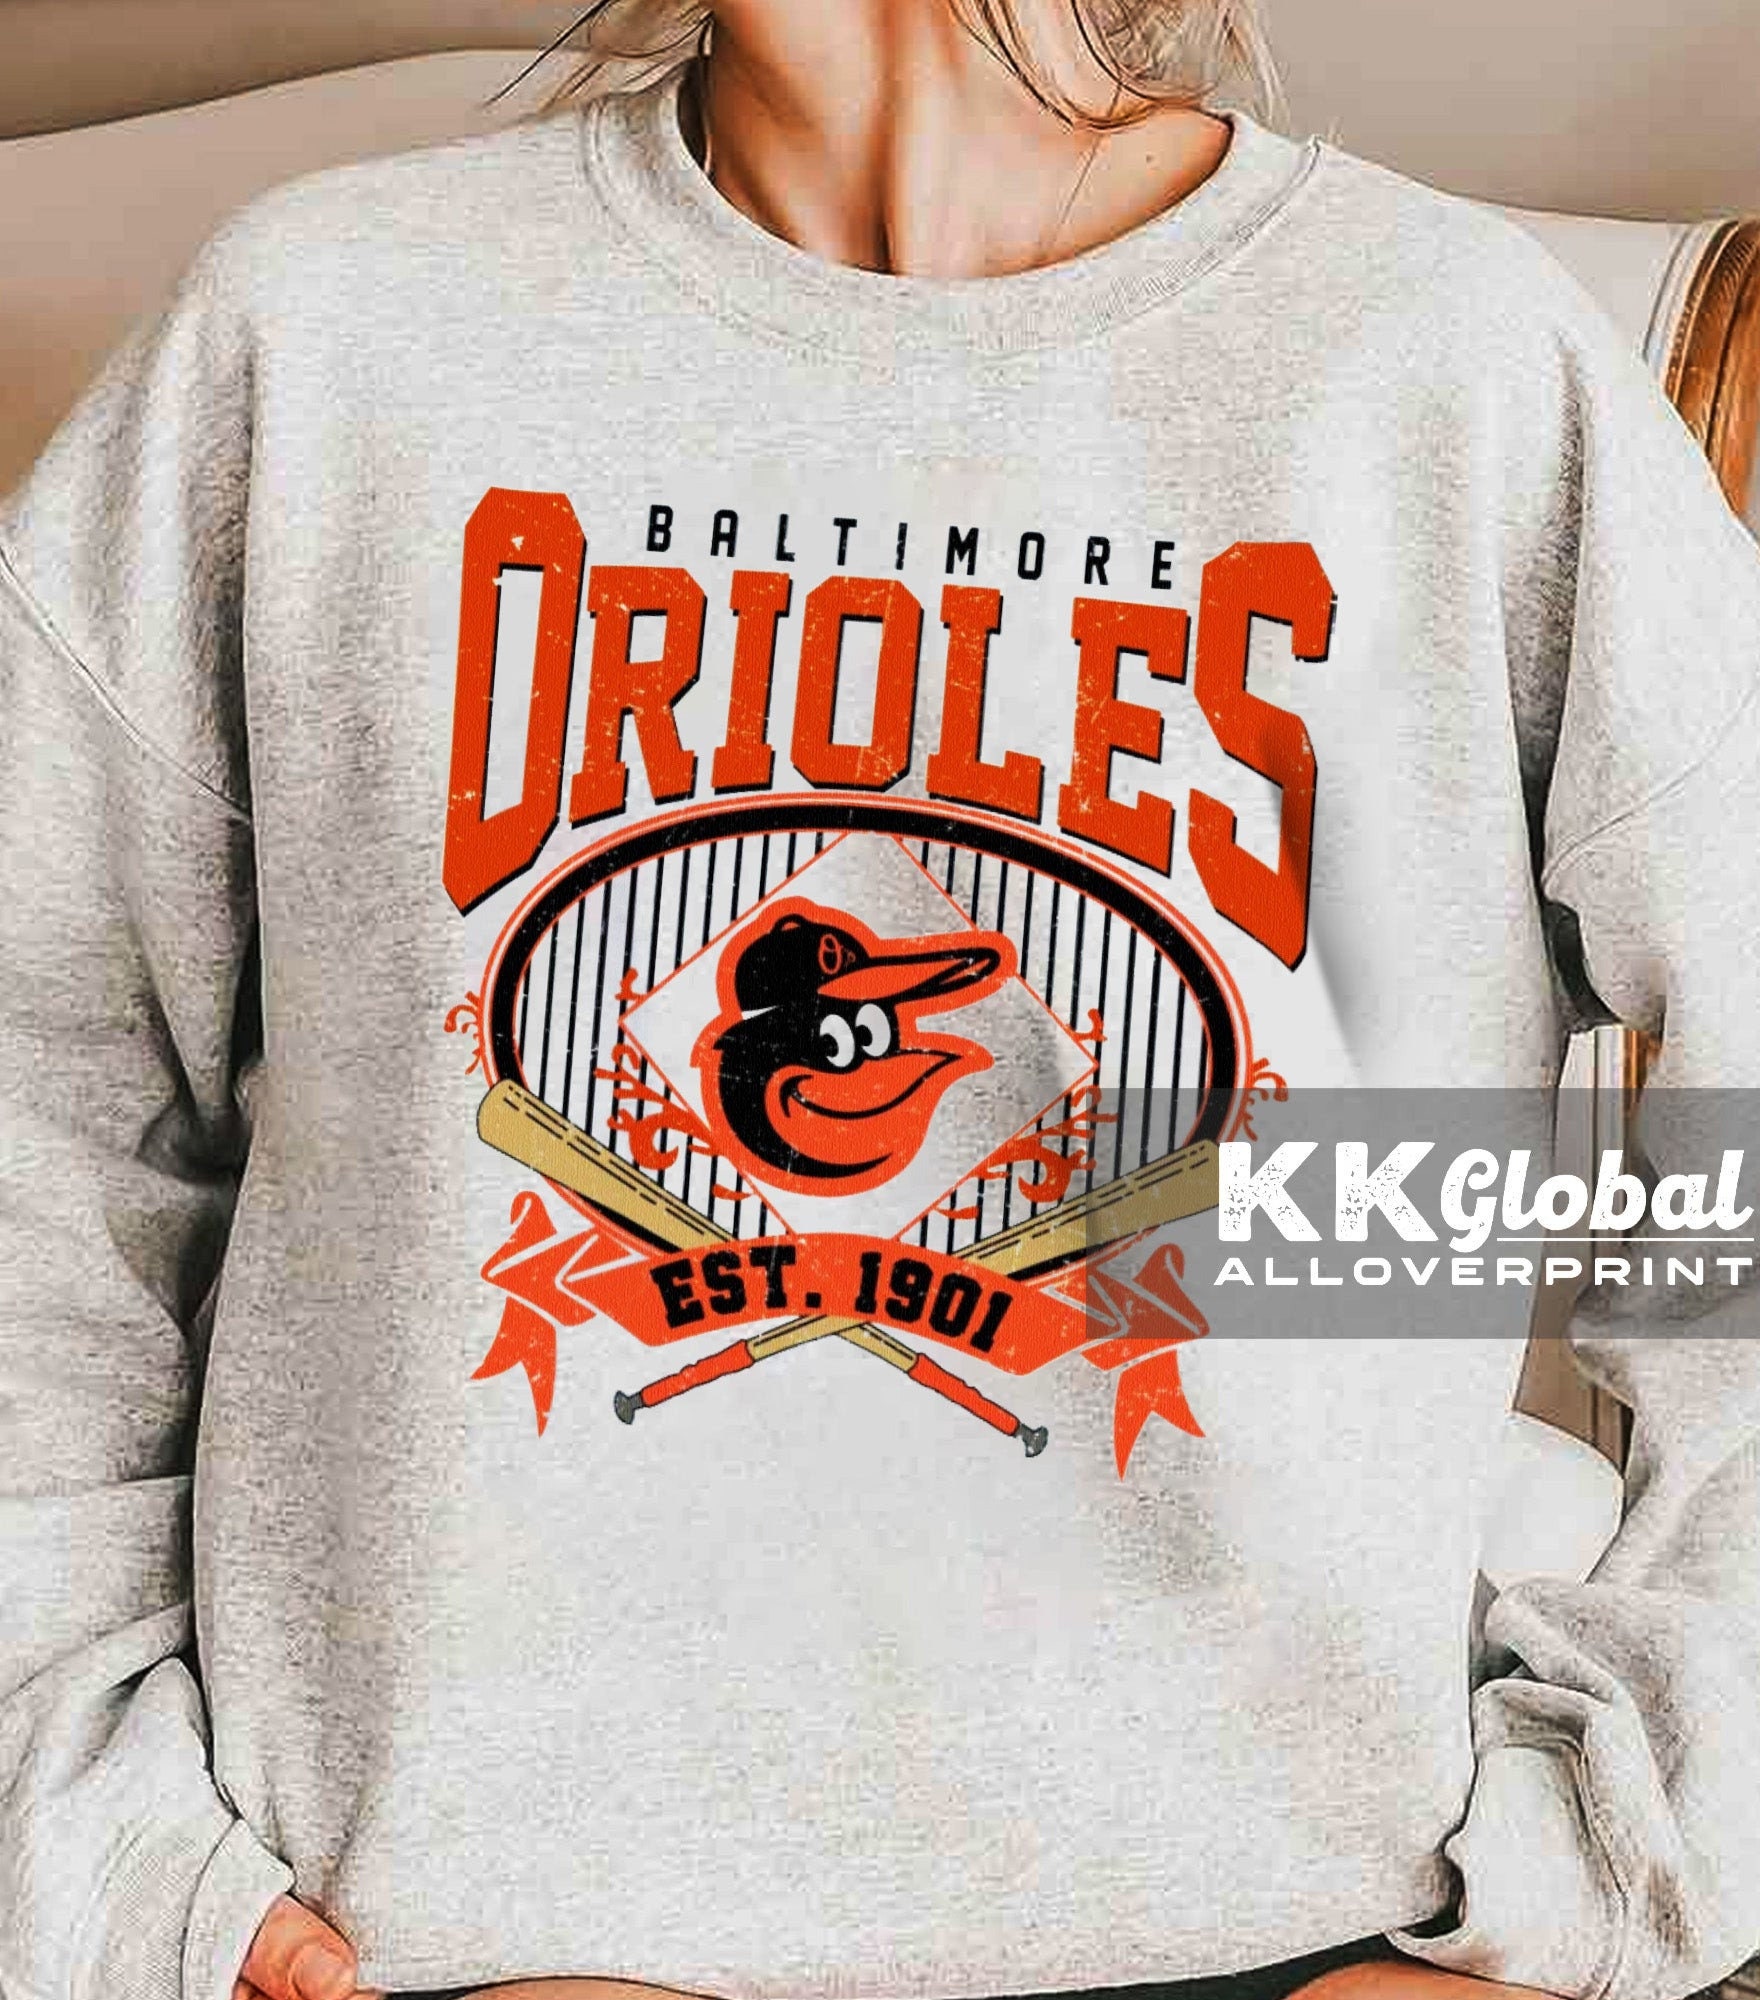 destinehodges Vintage Baltimore Oriole Est 1901 Shirt, T-Shirt, Hoodie. Oriole Crewneck Shirt, Baltimore Baseball Shirt, Retro Oriole Shirt